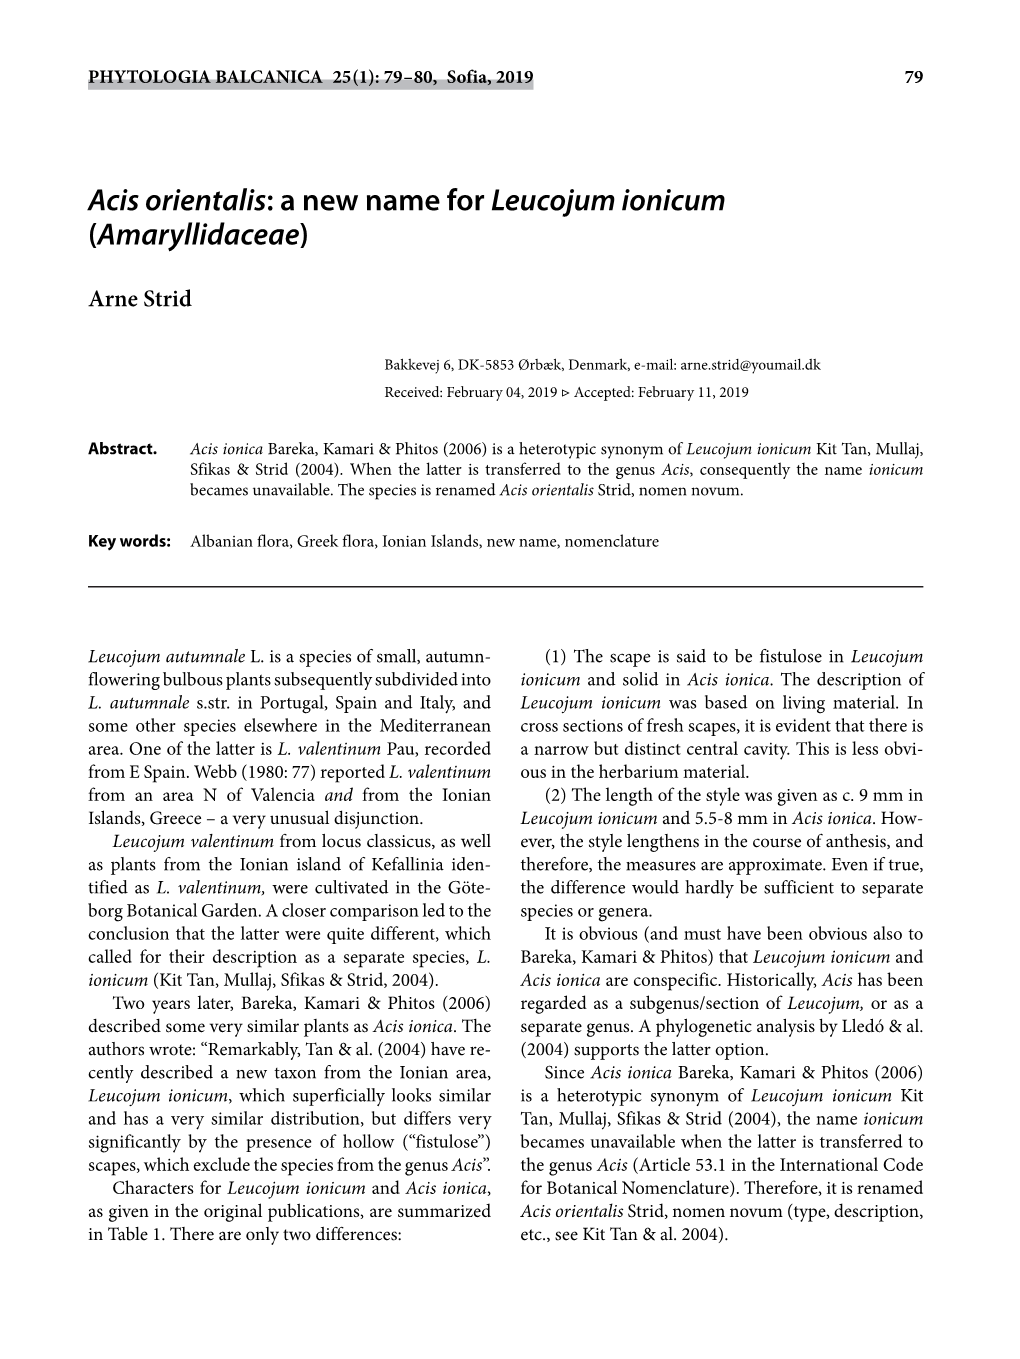 Acis Orientalis: a New Name for Leucojum Ionicum (Amaryllidaceae)